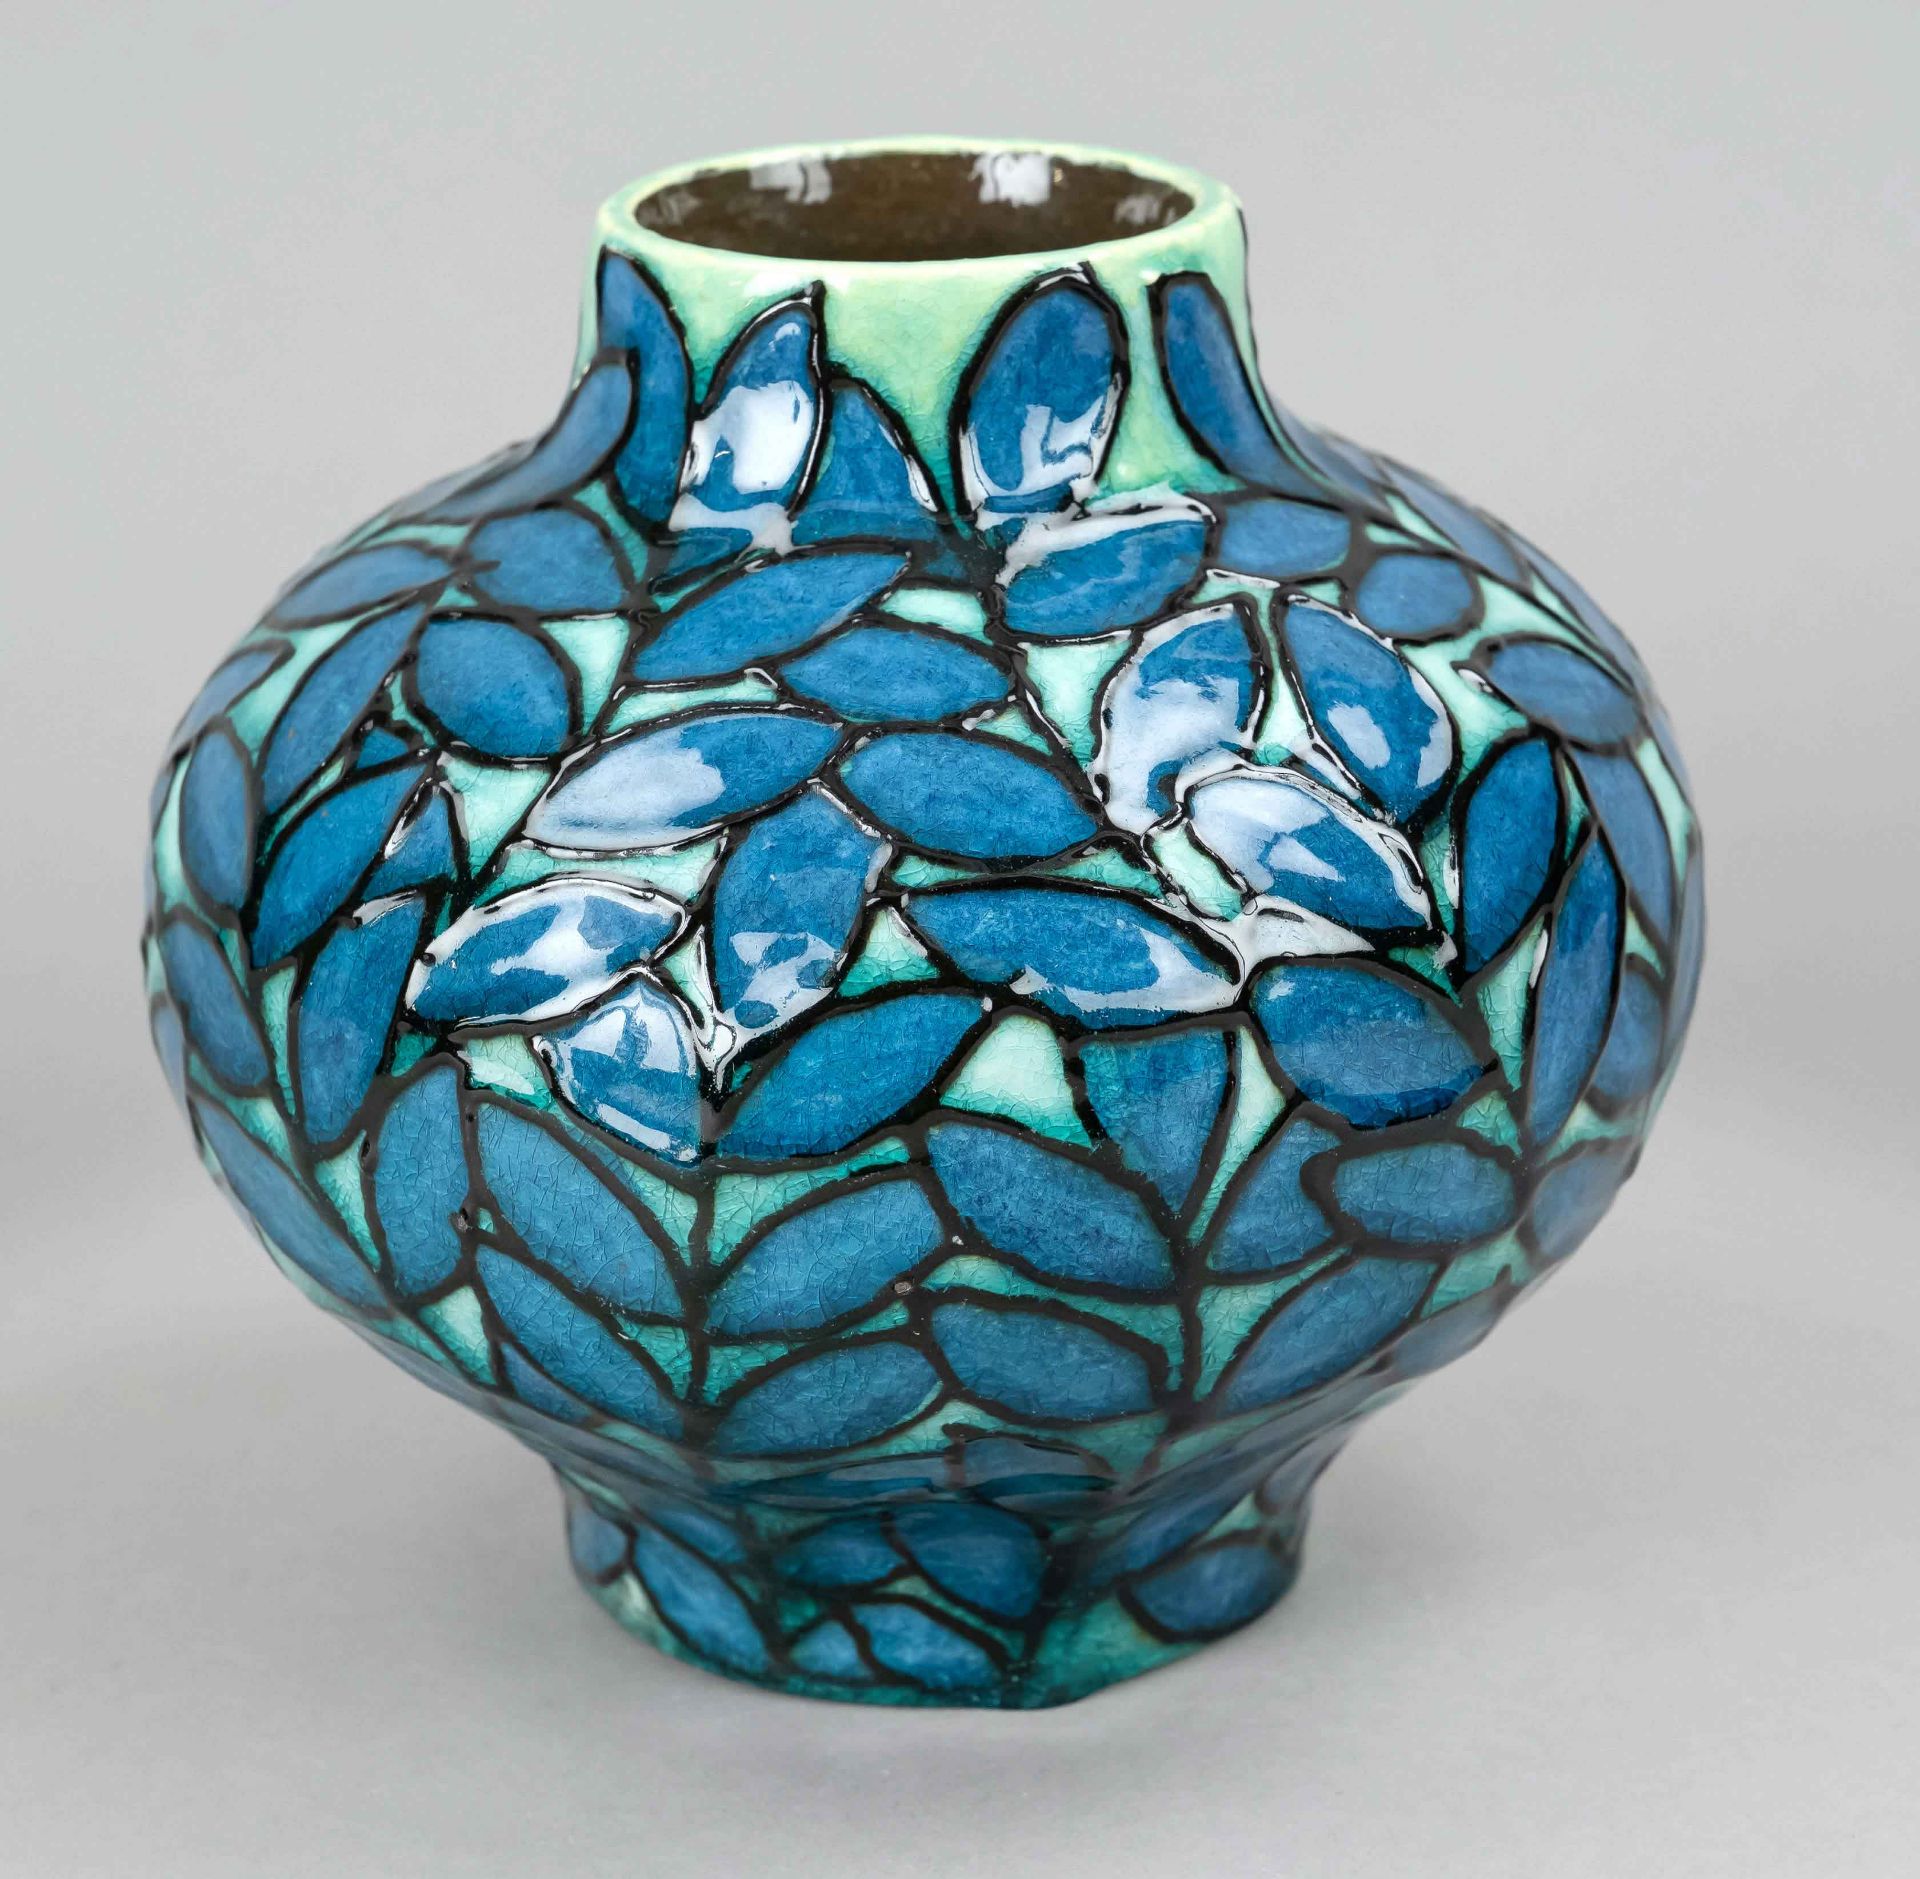 Artist's vase, 2nd half of the 20th century, Karlsruhe, design Mathias Ohndorf (1934-2015), round